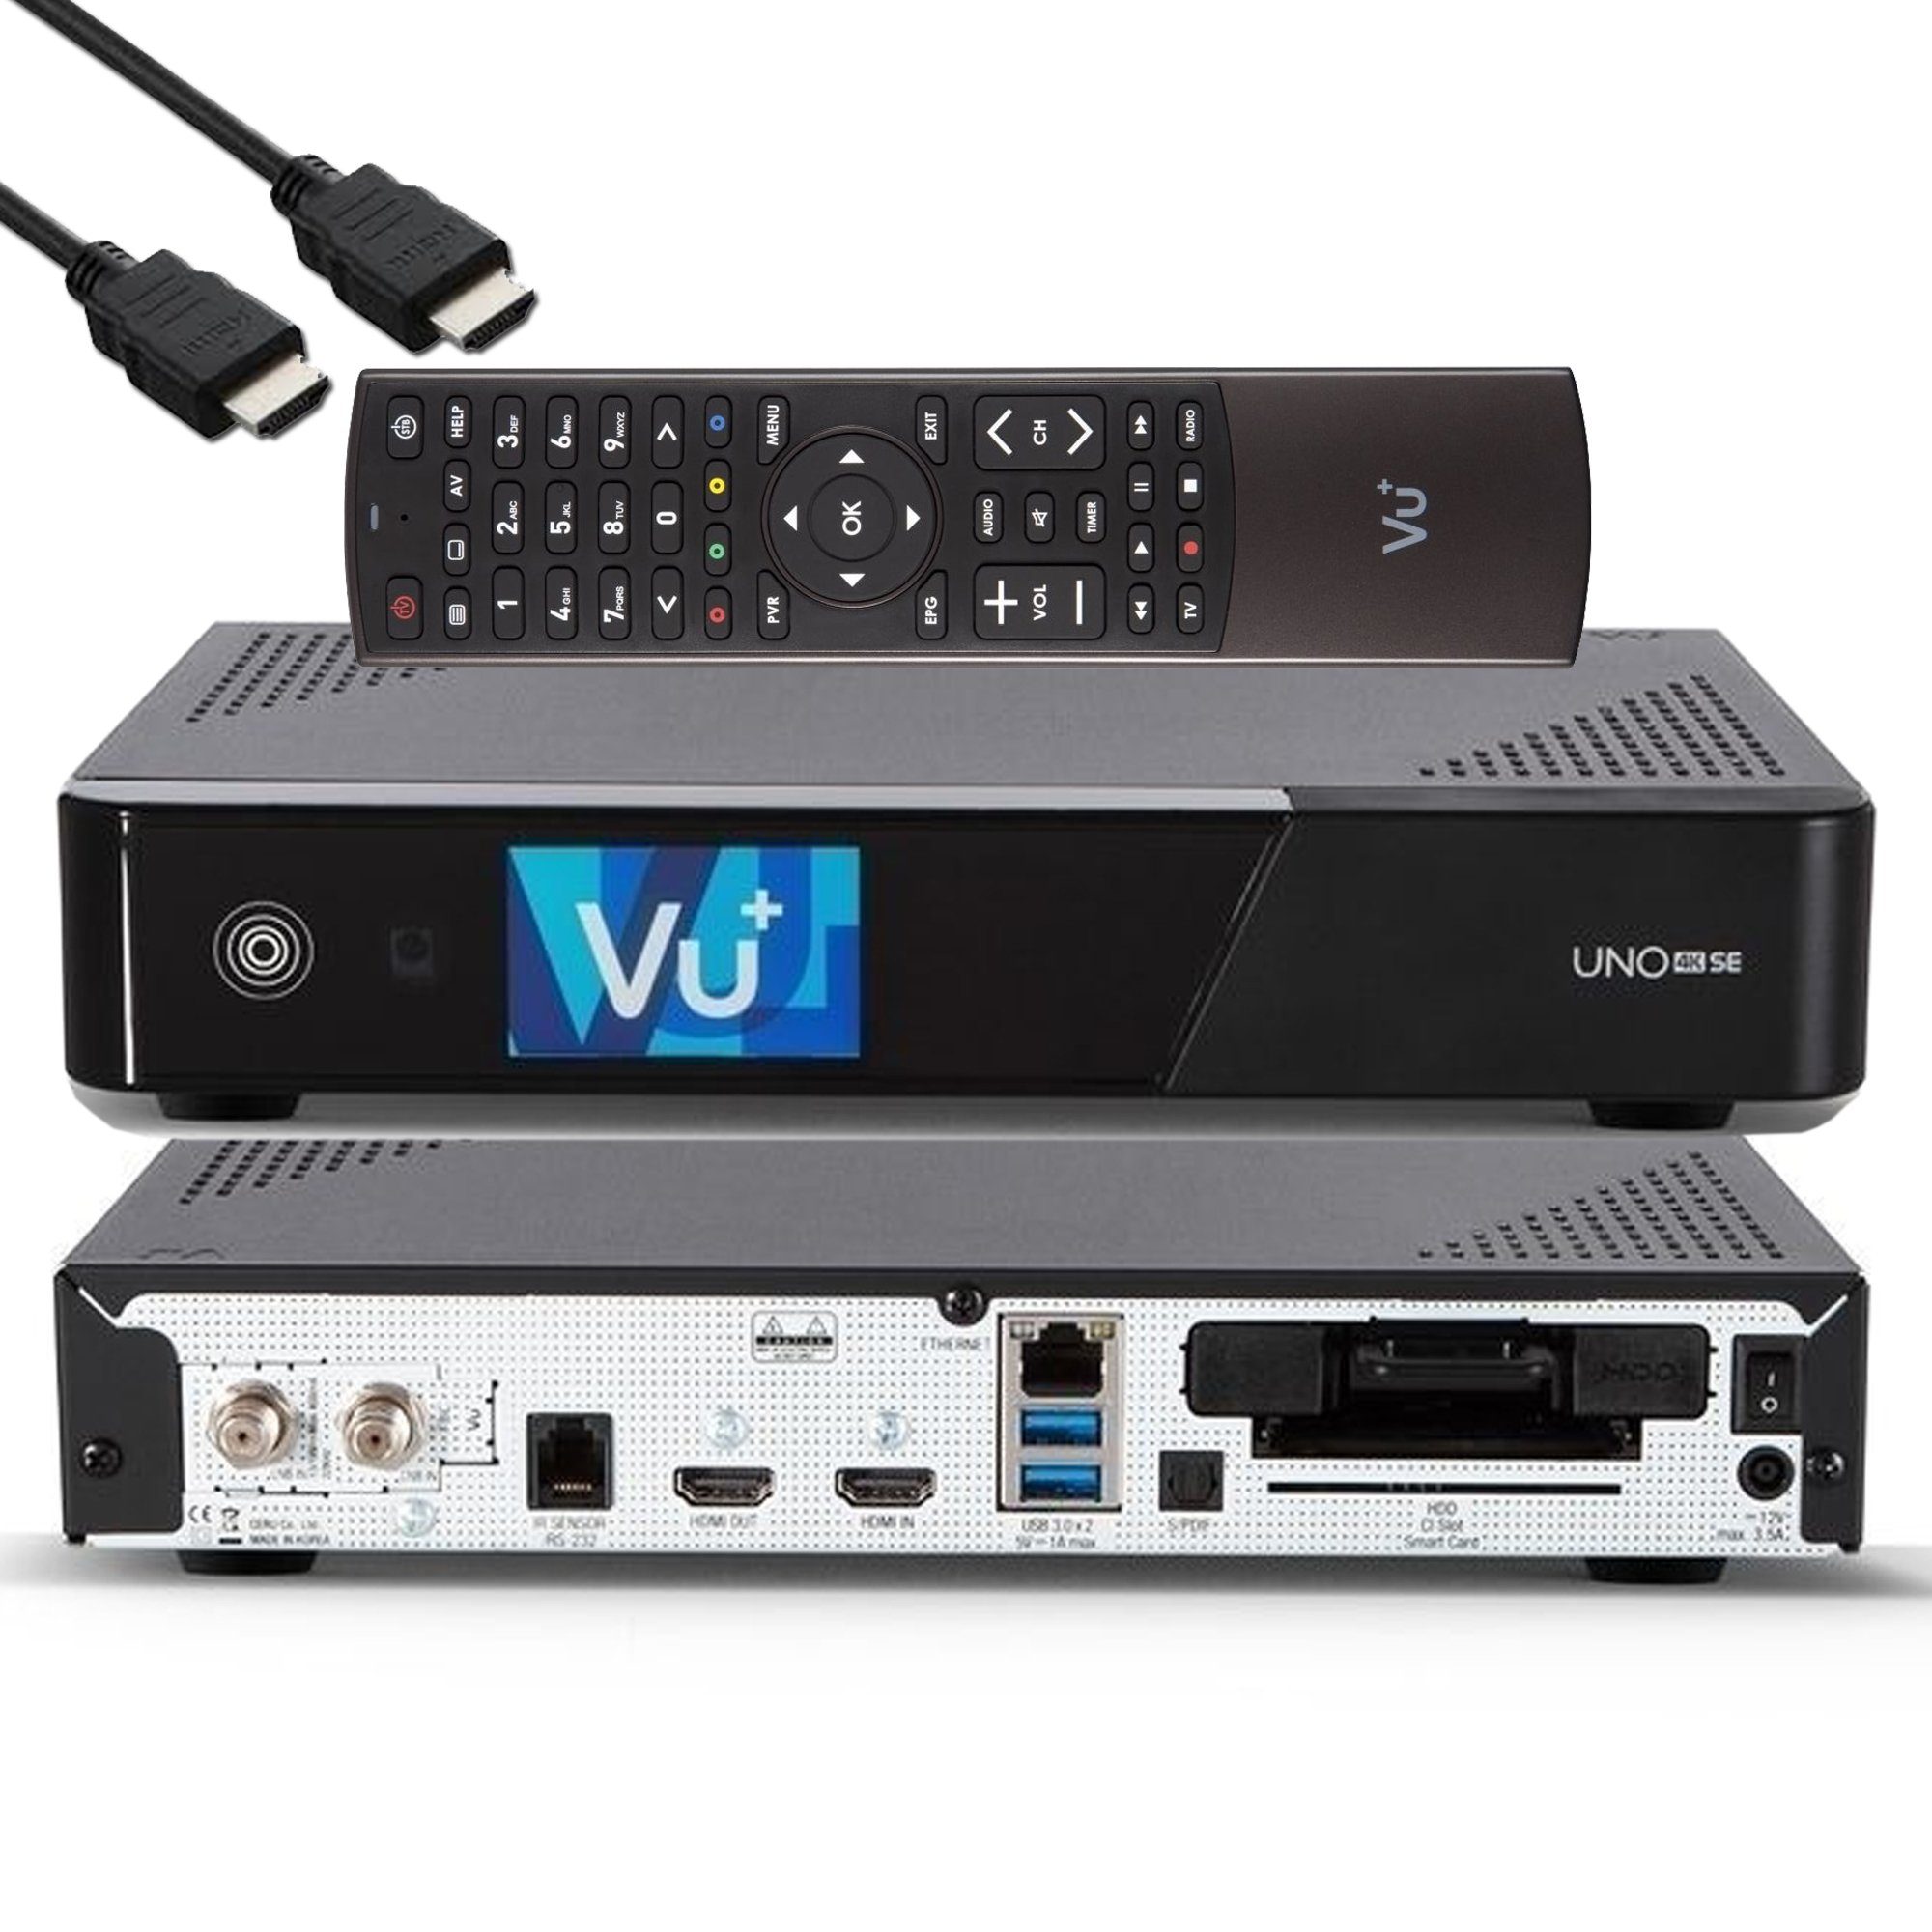 Sat SE E2 1x Linux SAT-Receiver HDR Tuner Receiver UHD Twin VU+ FBC 4K VU+ - UNO DVB-S2